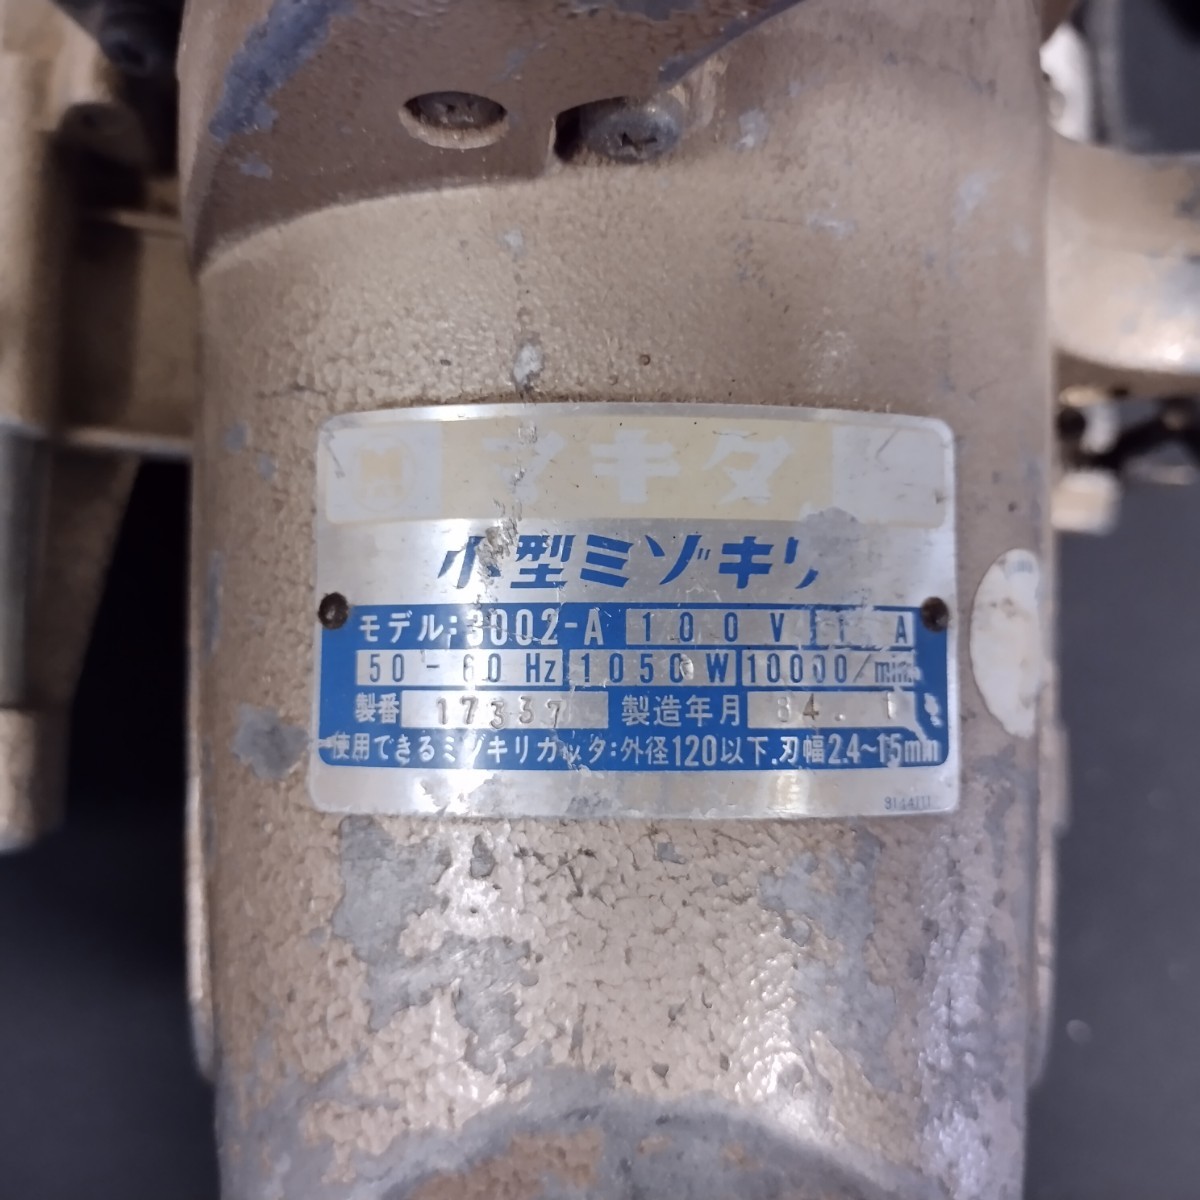 NR588 マキタ makita 小型ミゾキリ 3002-A カッタ 電動工具 ミゾキリ DIY用品 大工道具 動作確認済_画像9